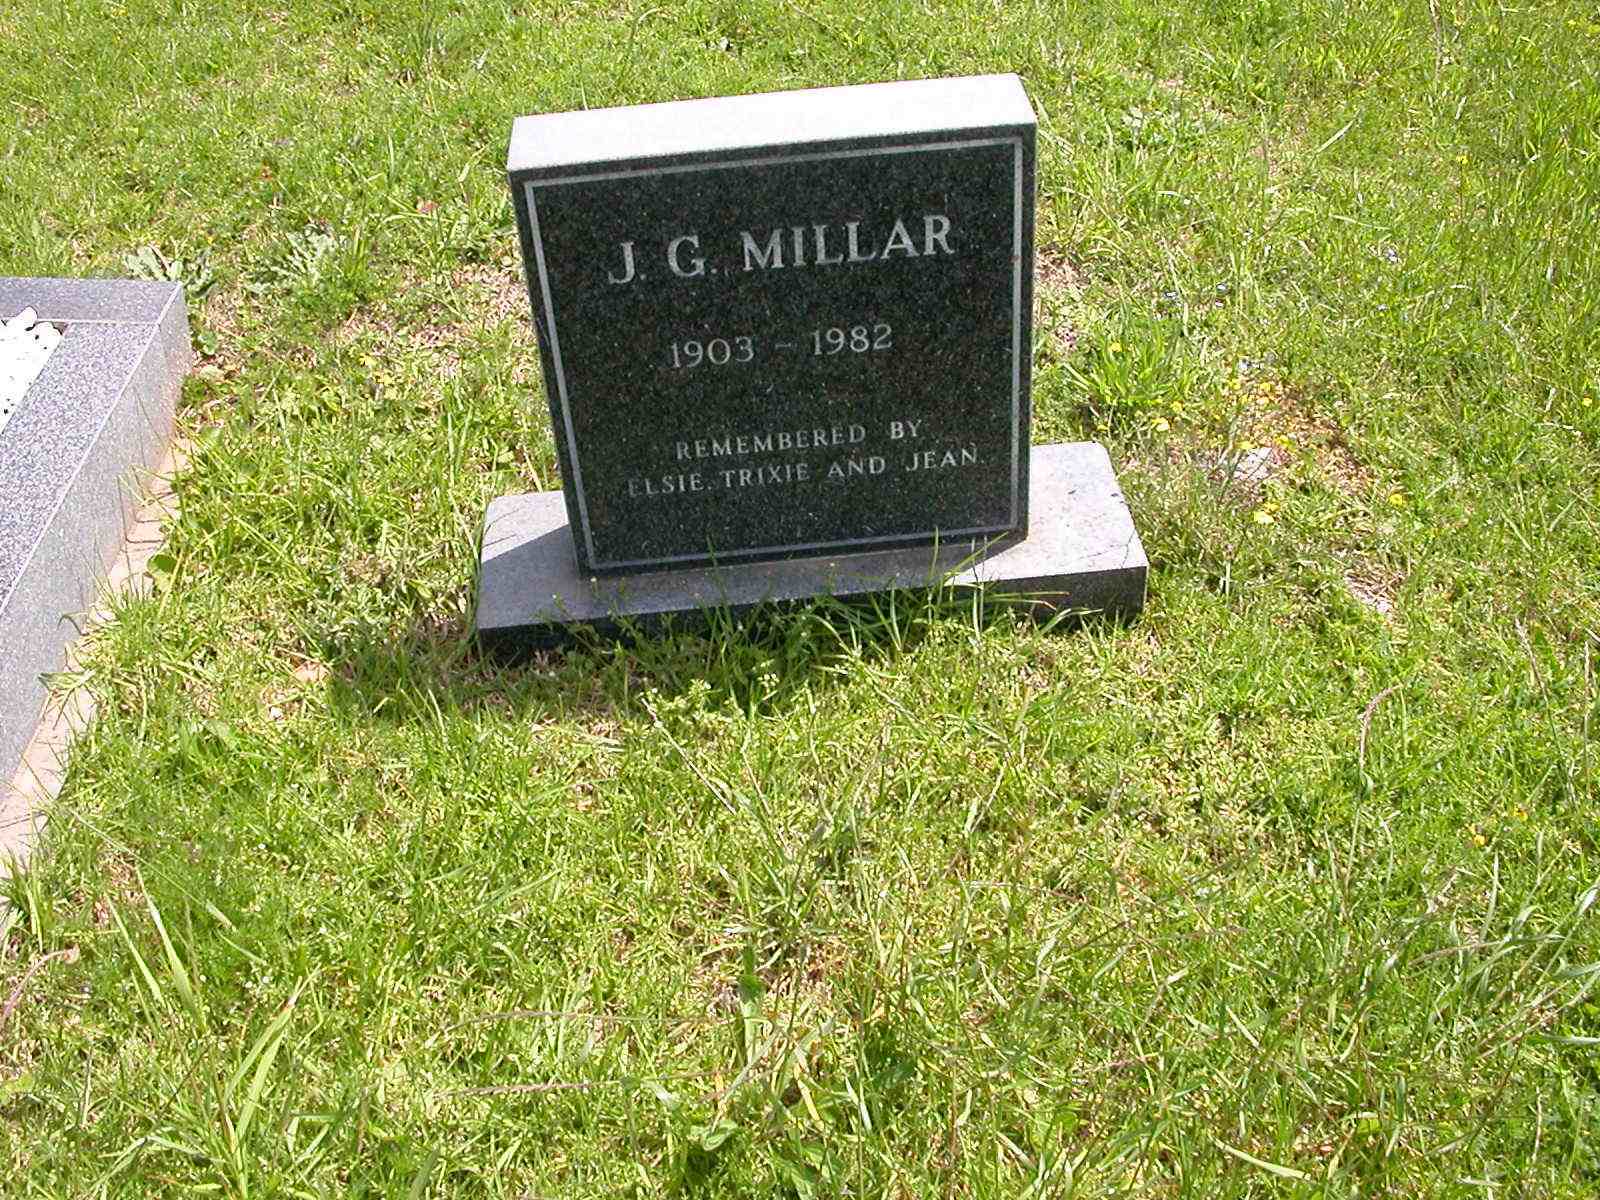 MILLAR J.G. 1903-1982